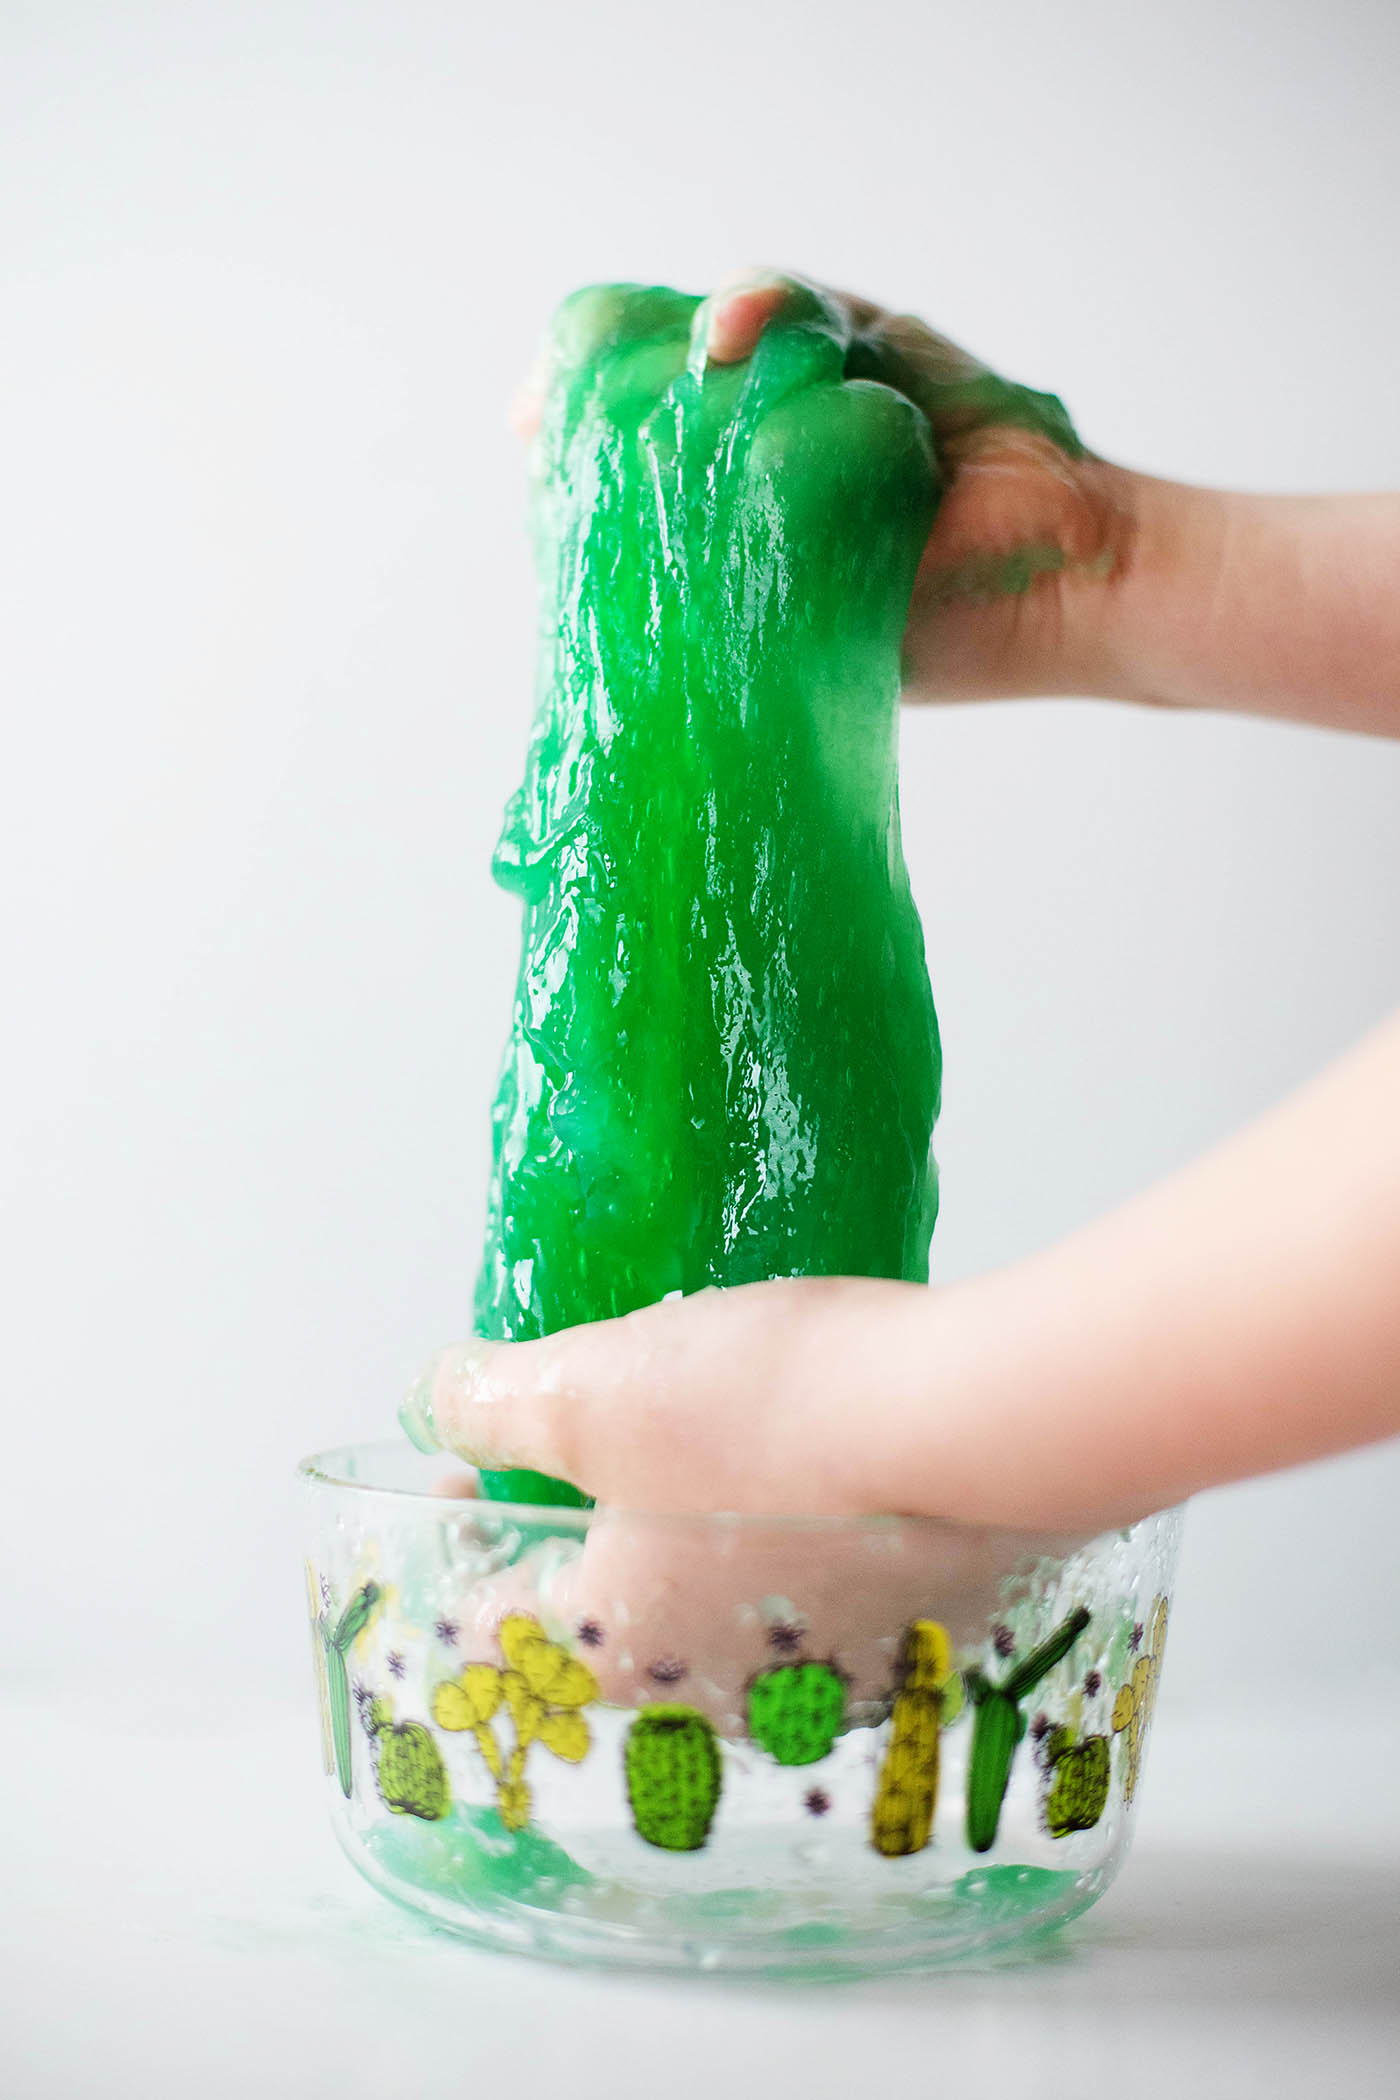 Is Homemade Slime Safe?